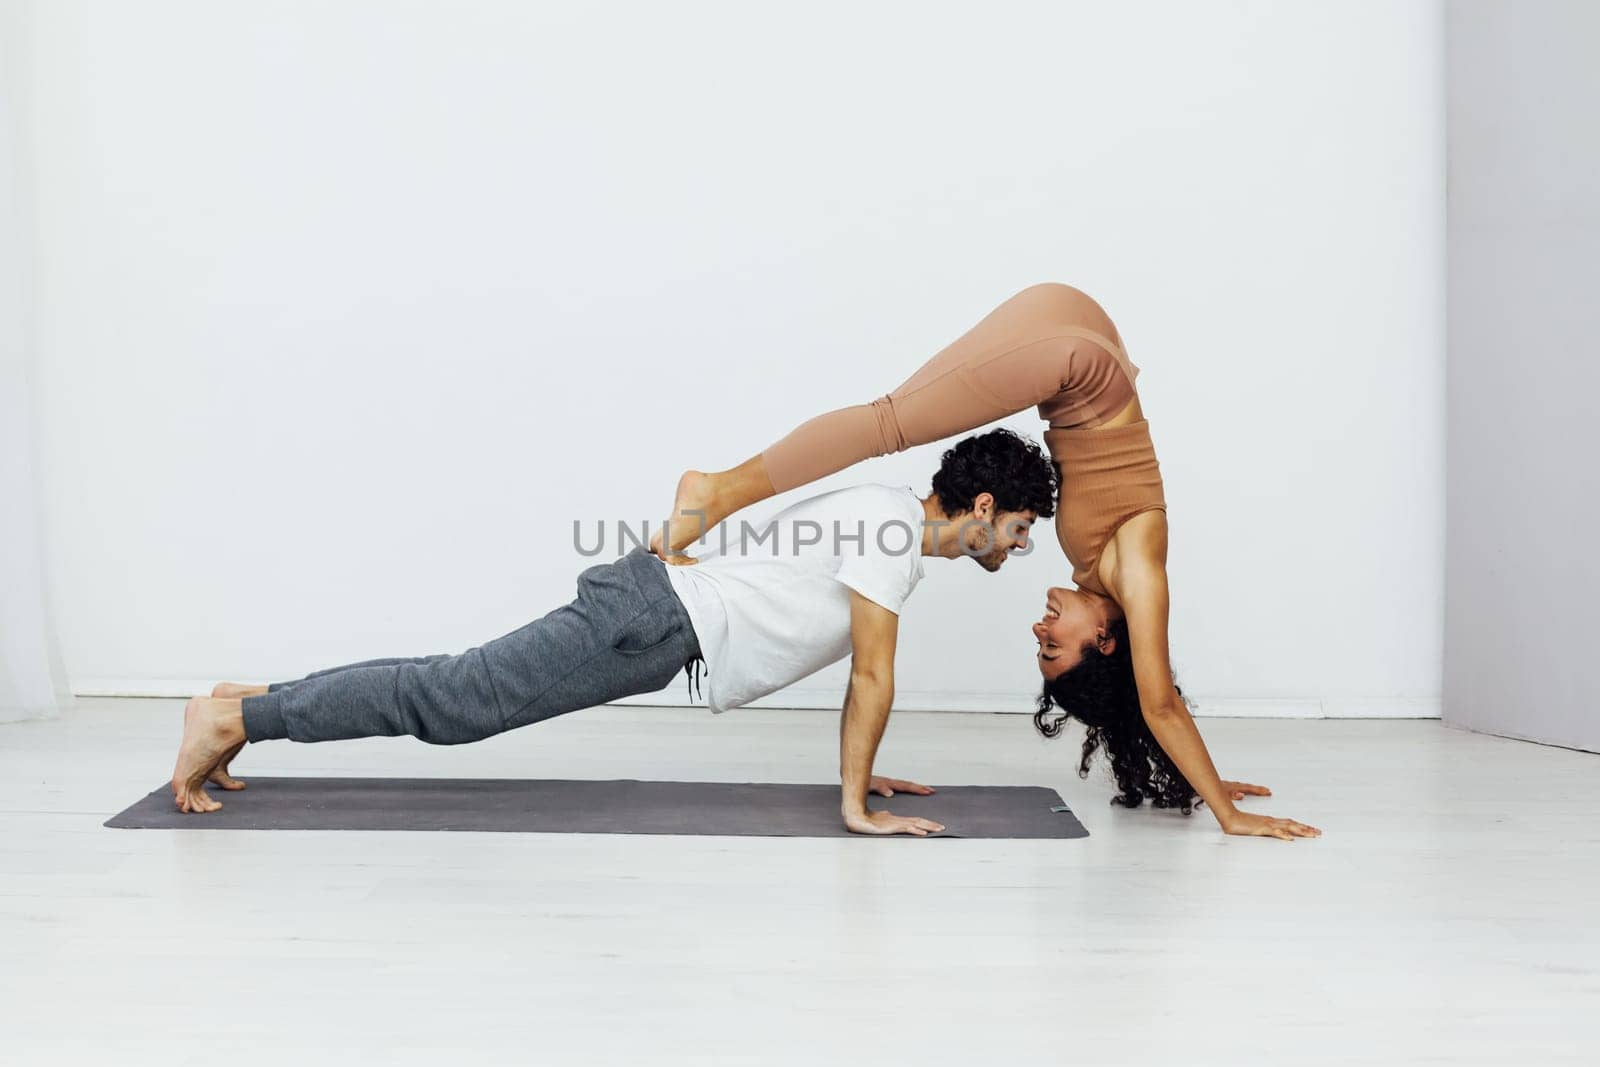 yoga poses woman and man do gymnastics warm-up exercises asana flexible body by Simakov